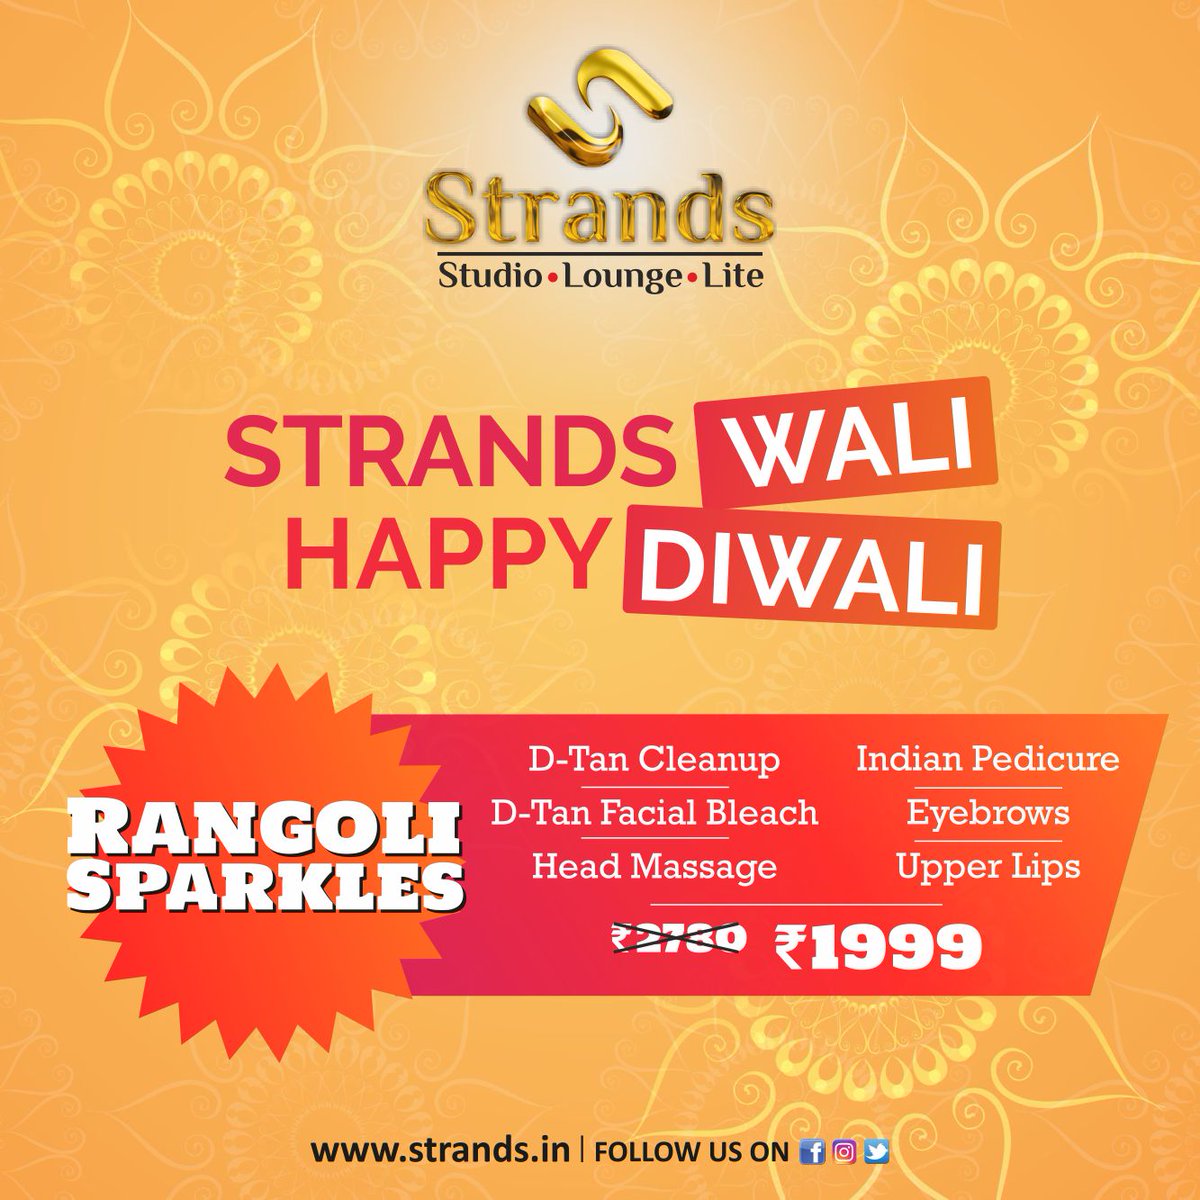 #Strands Wali #happyDiwali 
#festival #talenthunt #chakkdephatte #roposogal
#travel